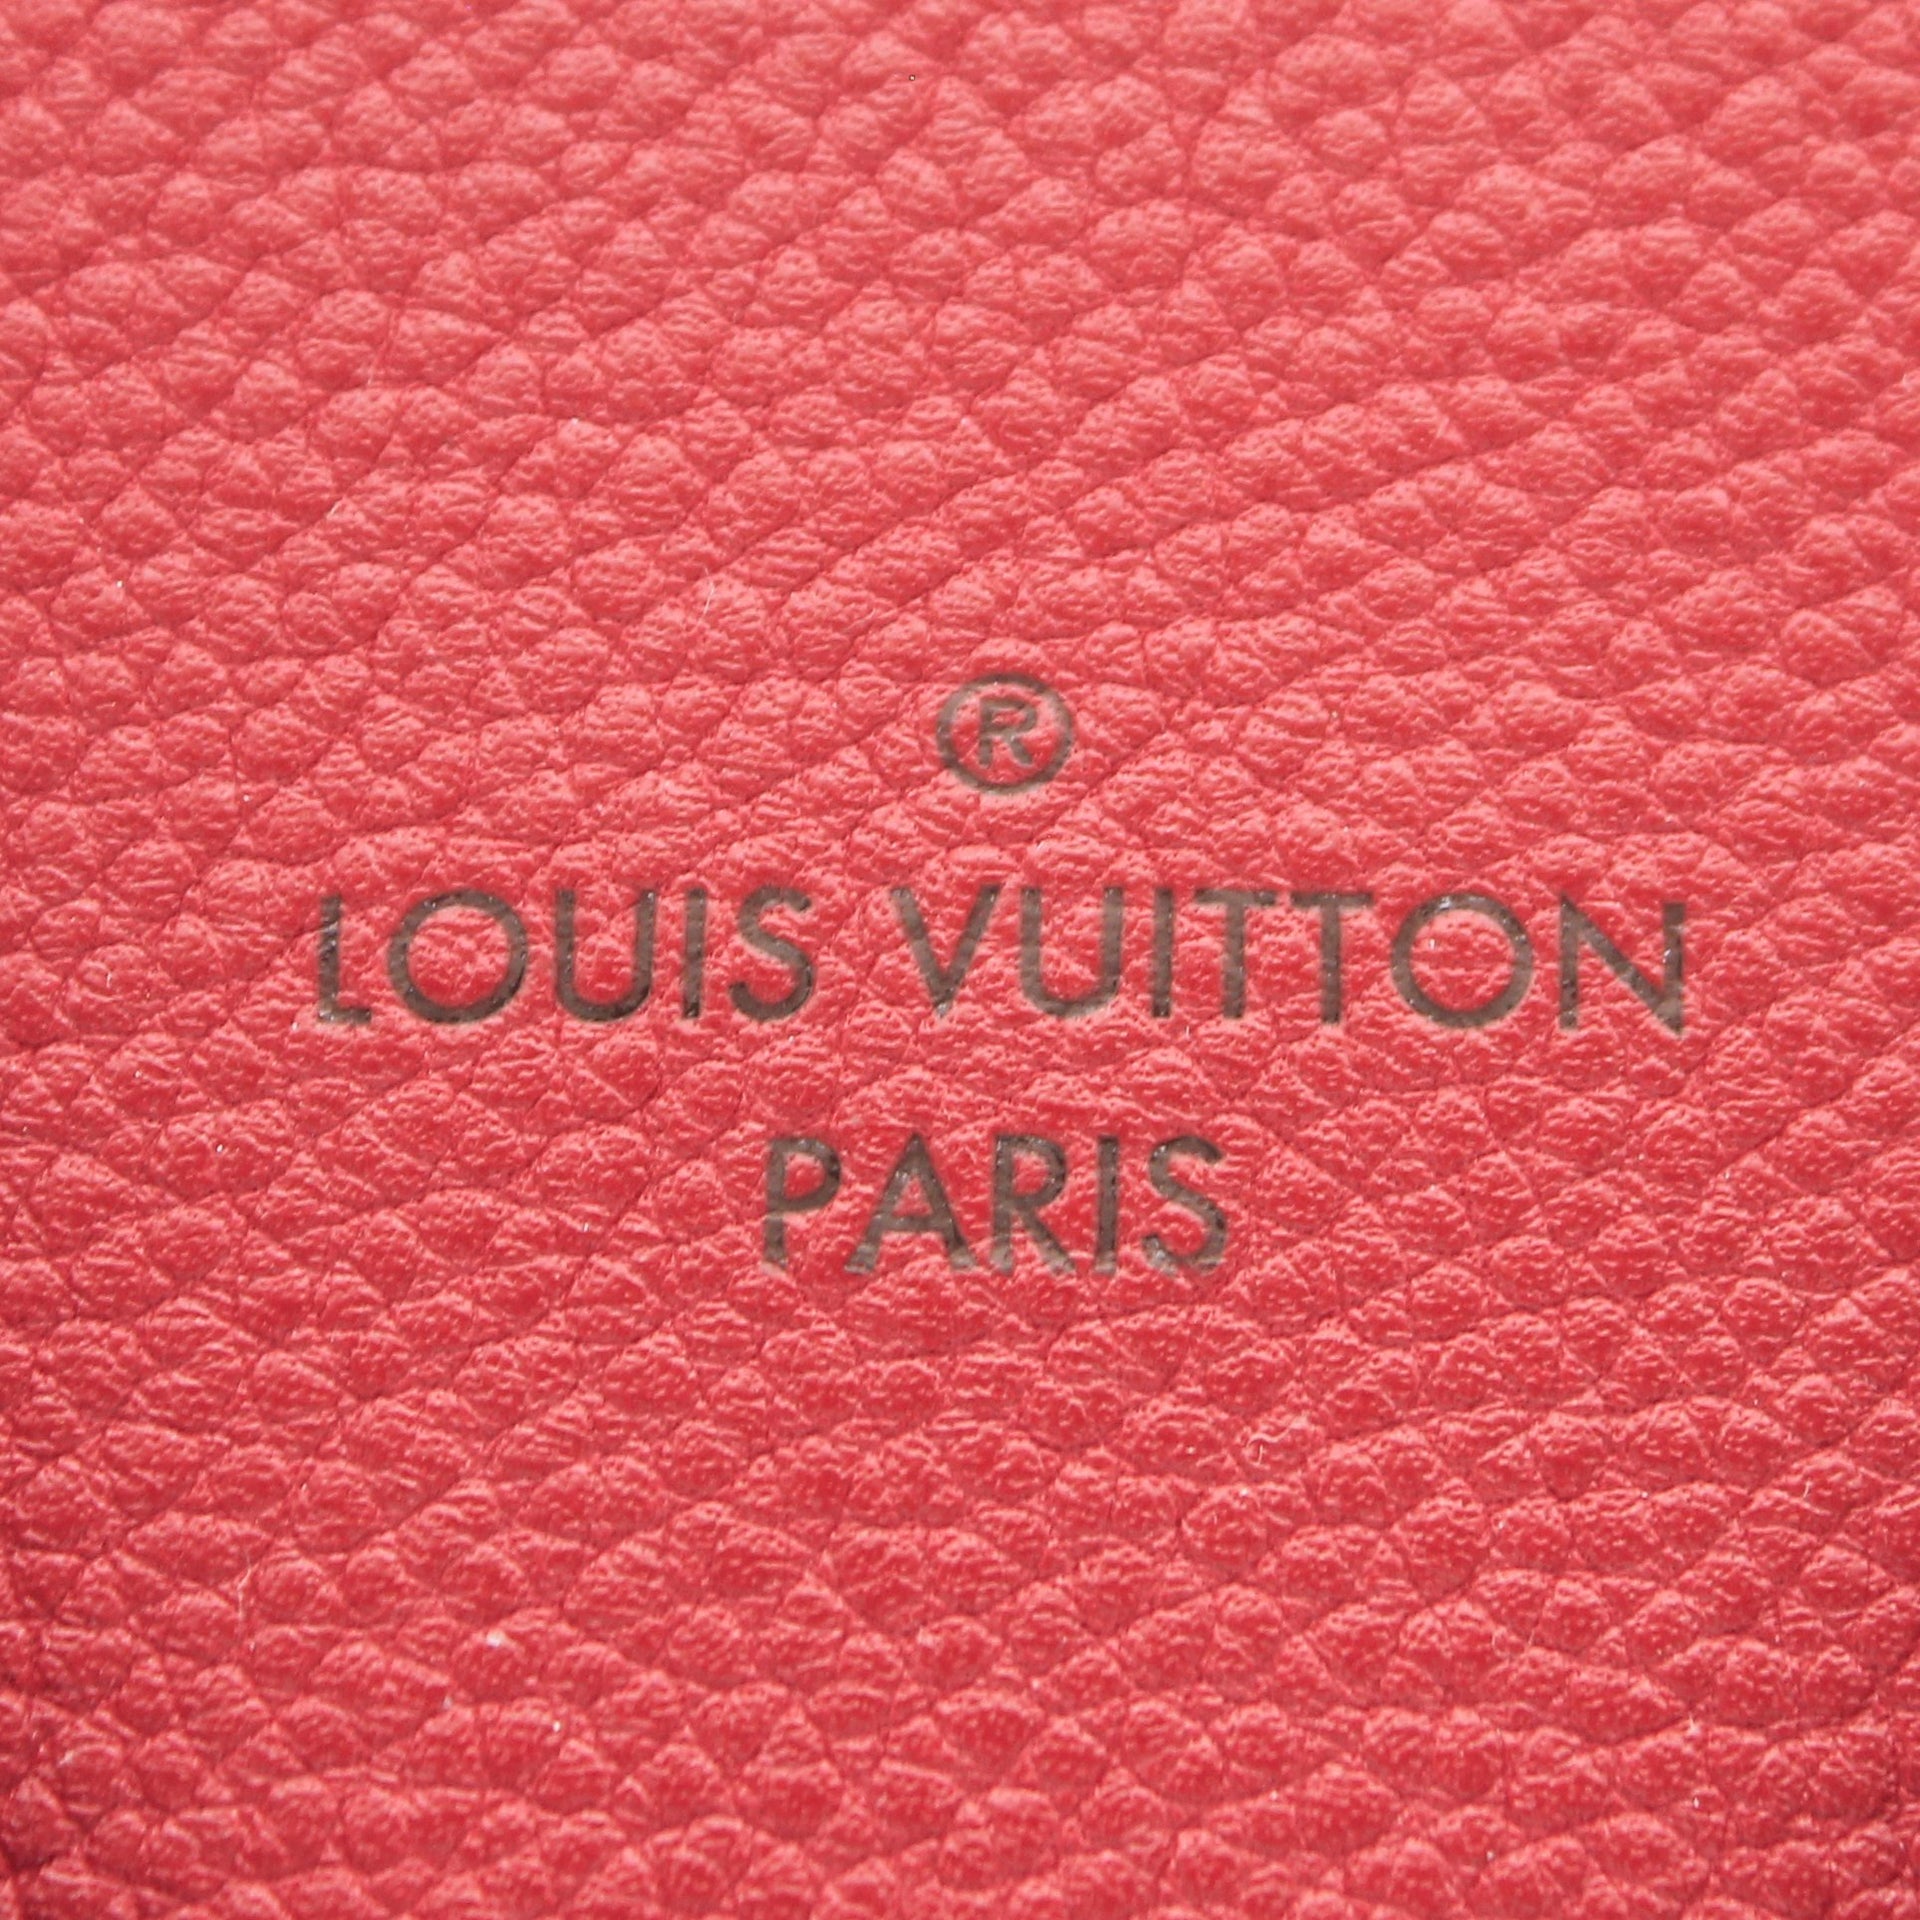 Louis Vuitton V Tote BB Monogram Canvas – STYLISHTOP